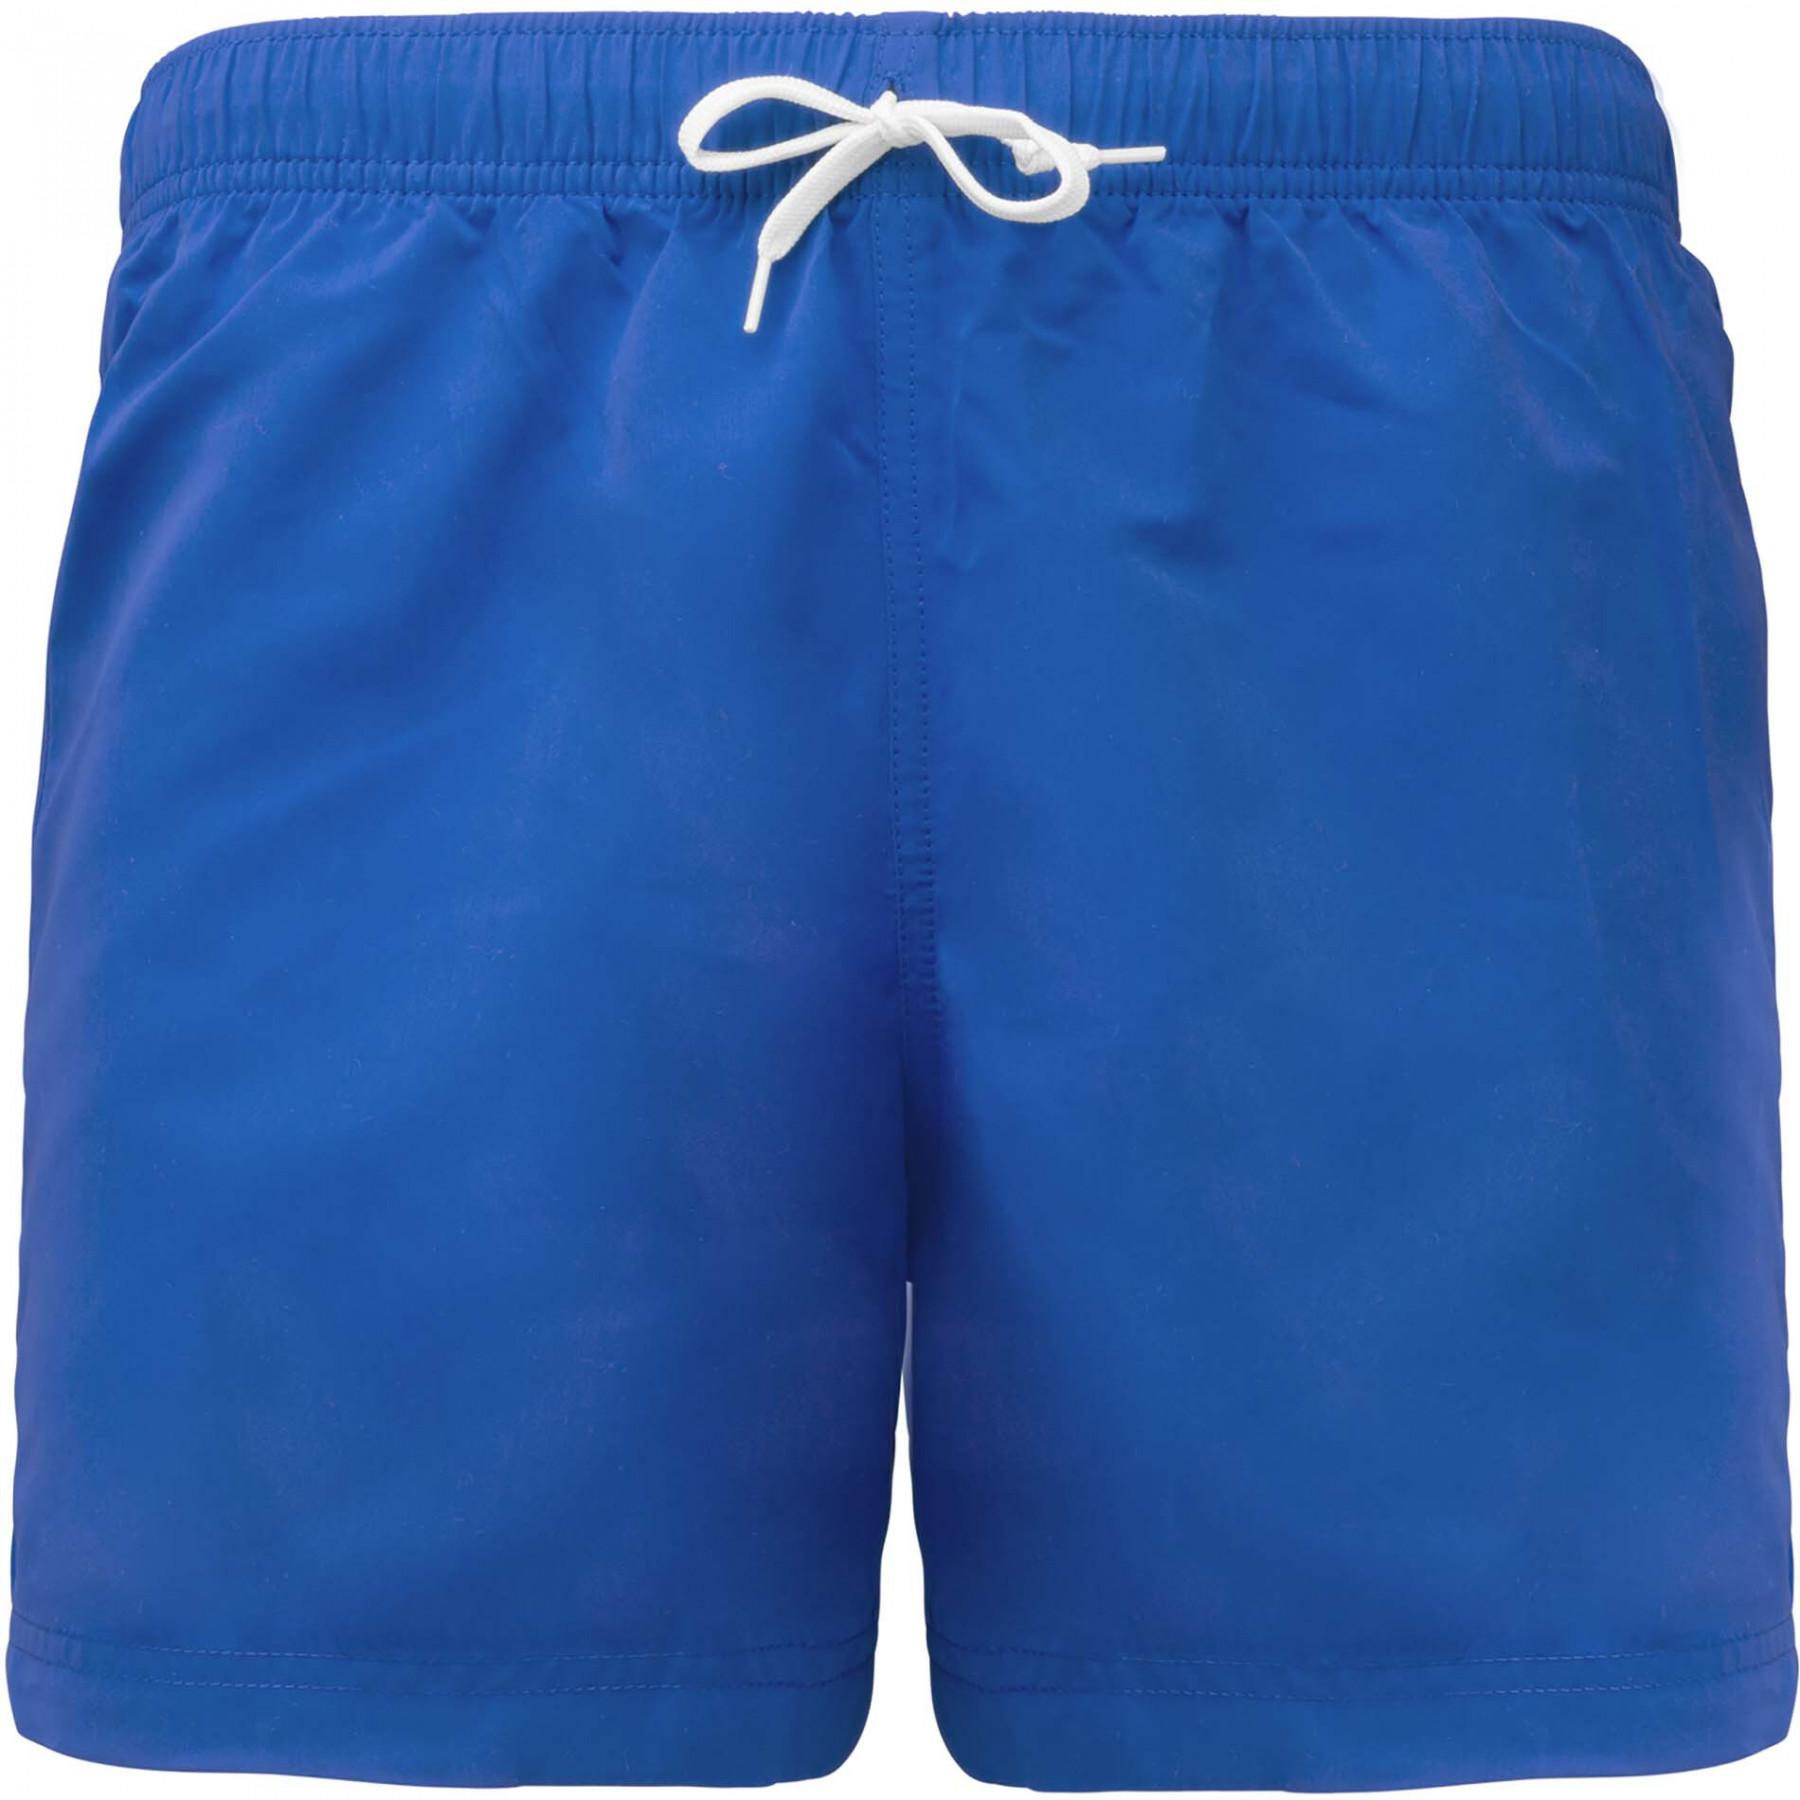 Short swim shorts Proact